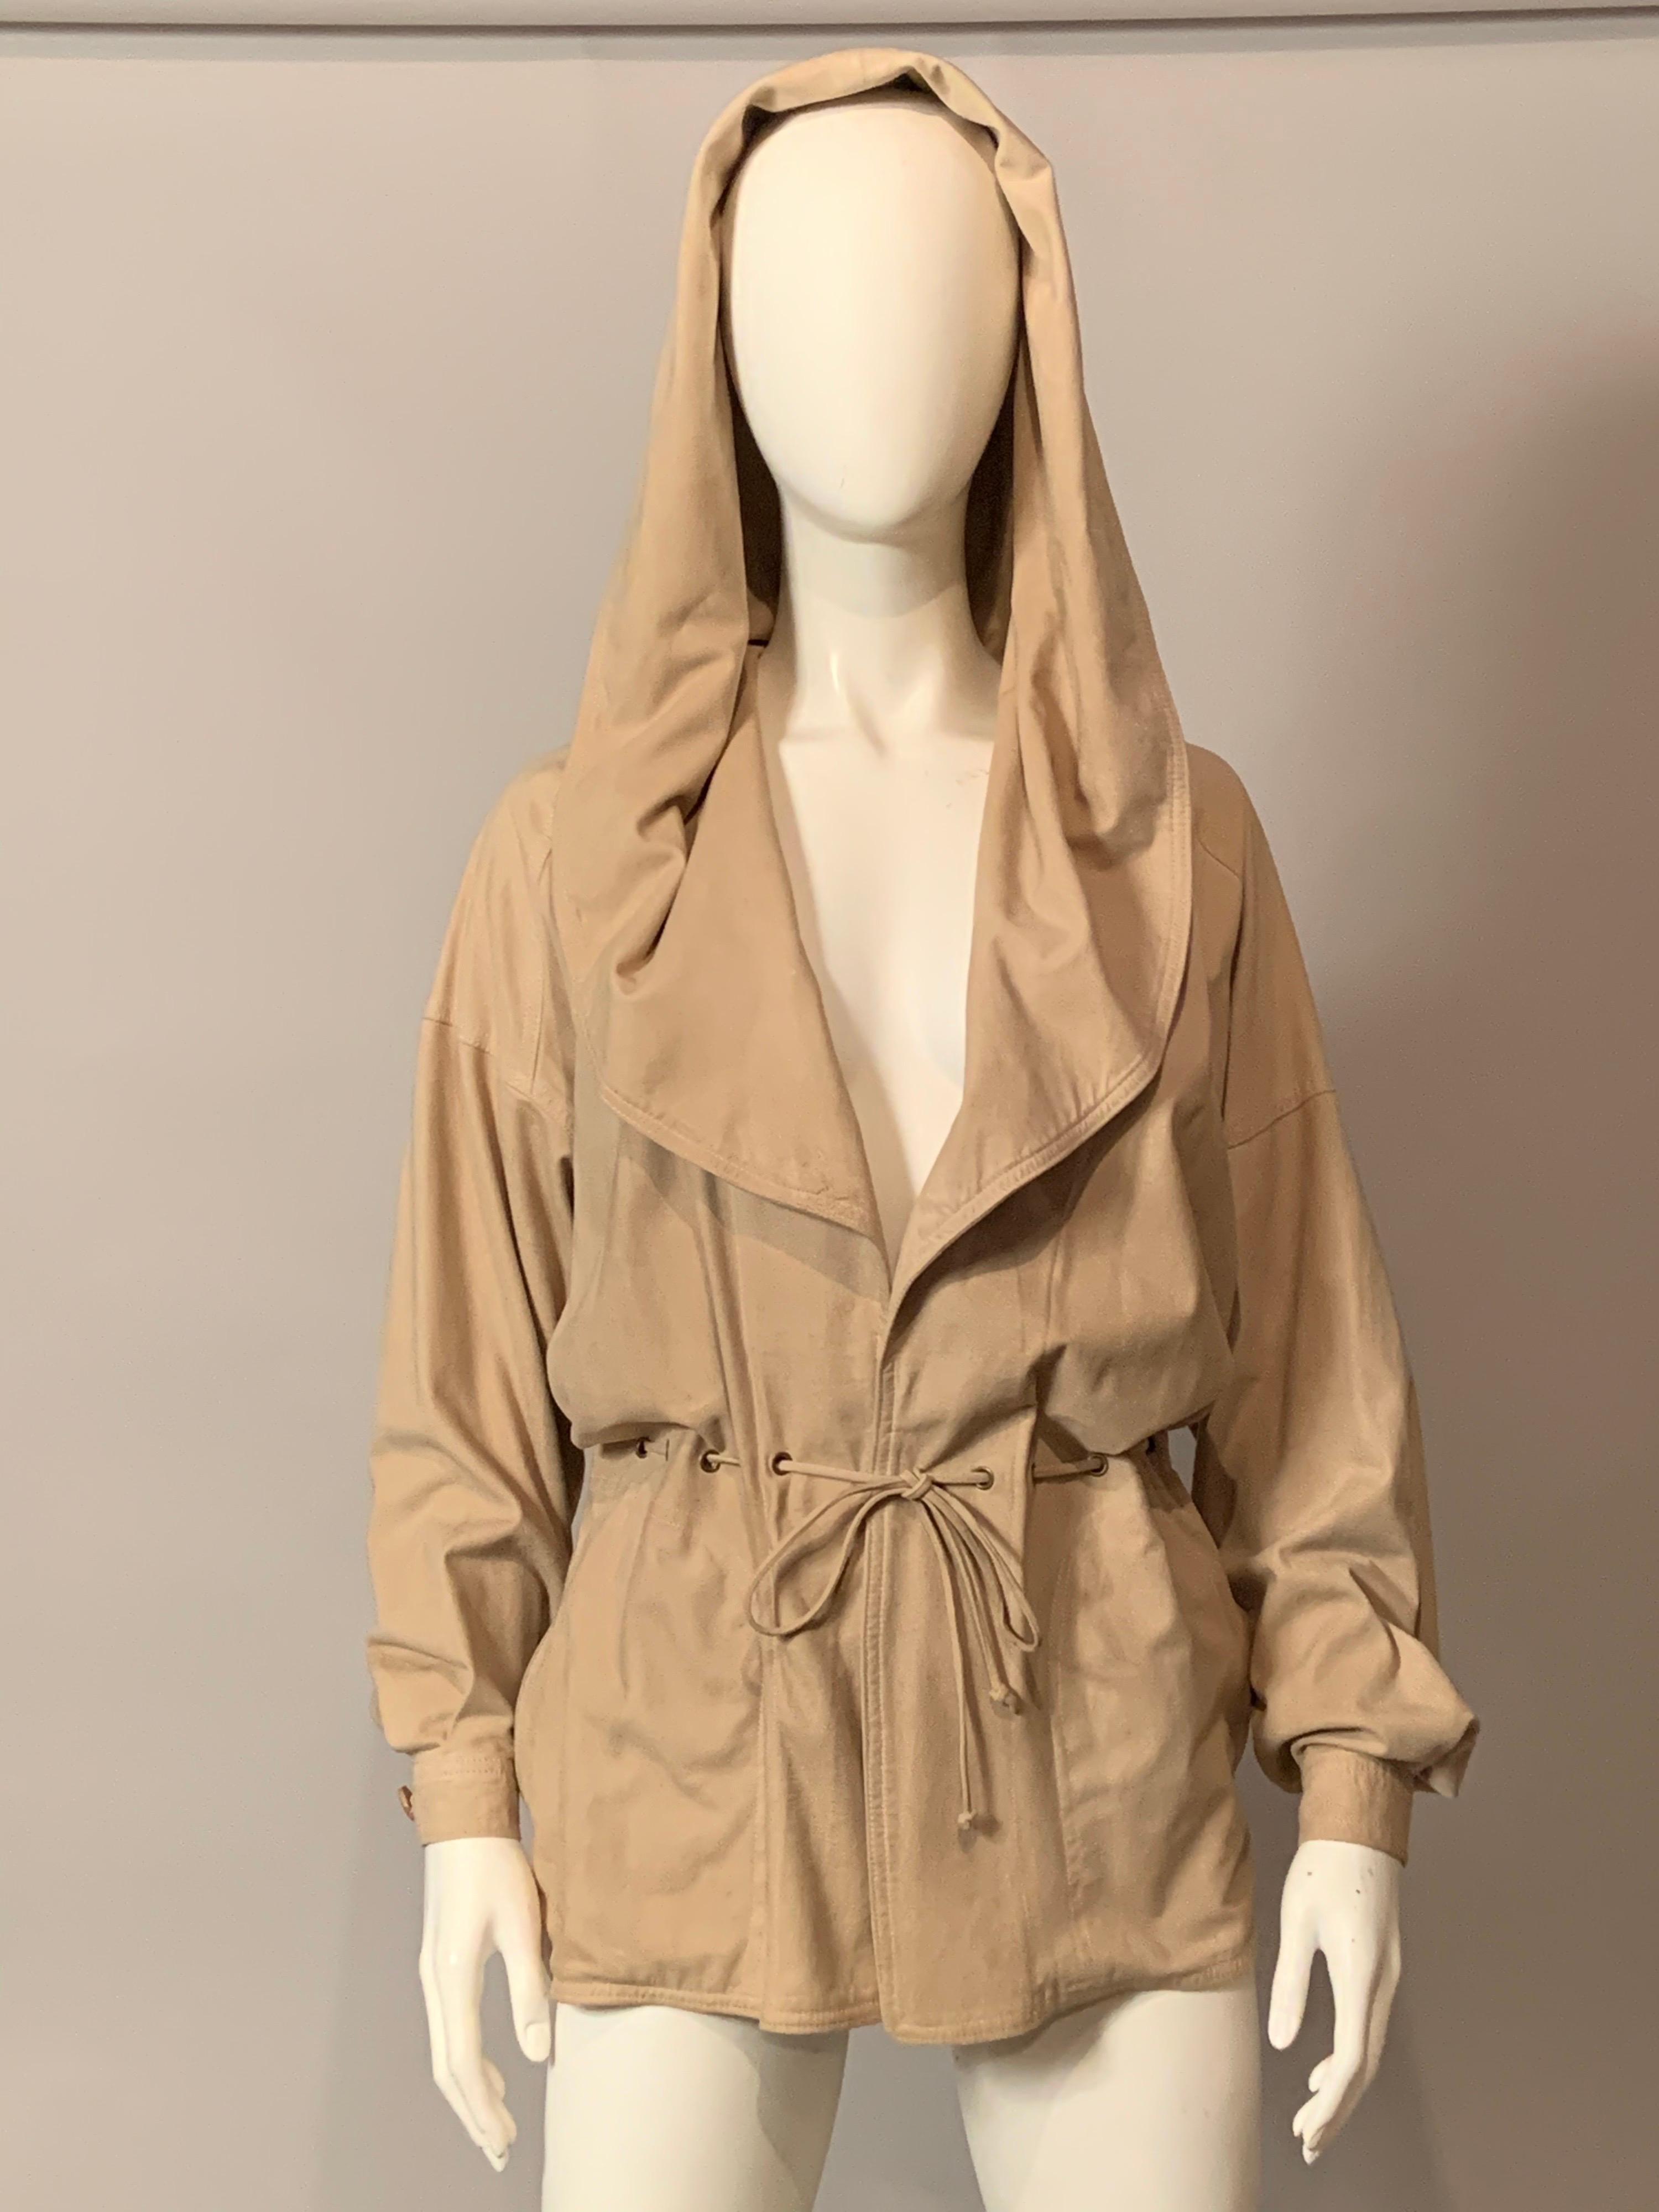 Women's 1970's Anne Klein Pale Beige Chamois Suede Jacket with Hood 